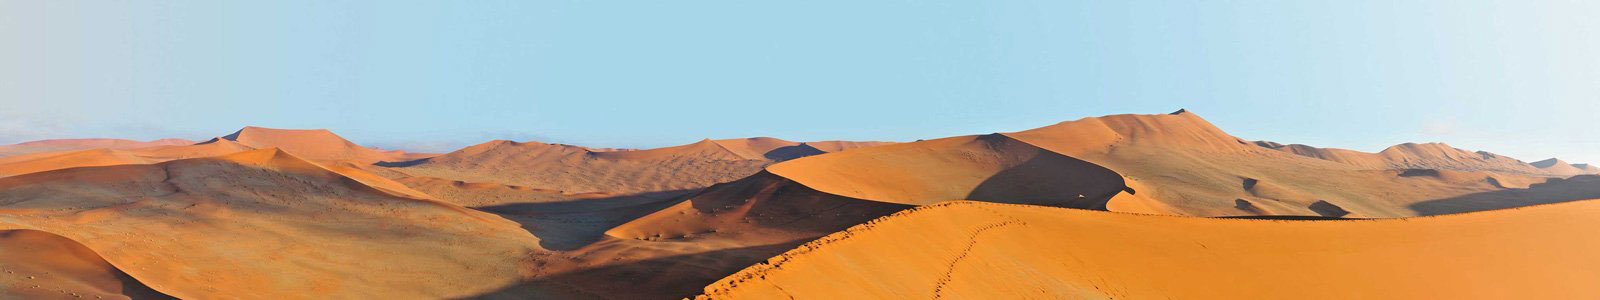 №6576 - Панорама пустыни